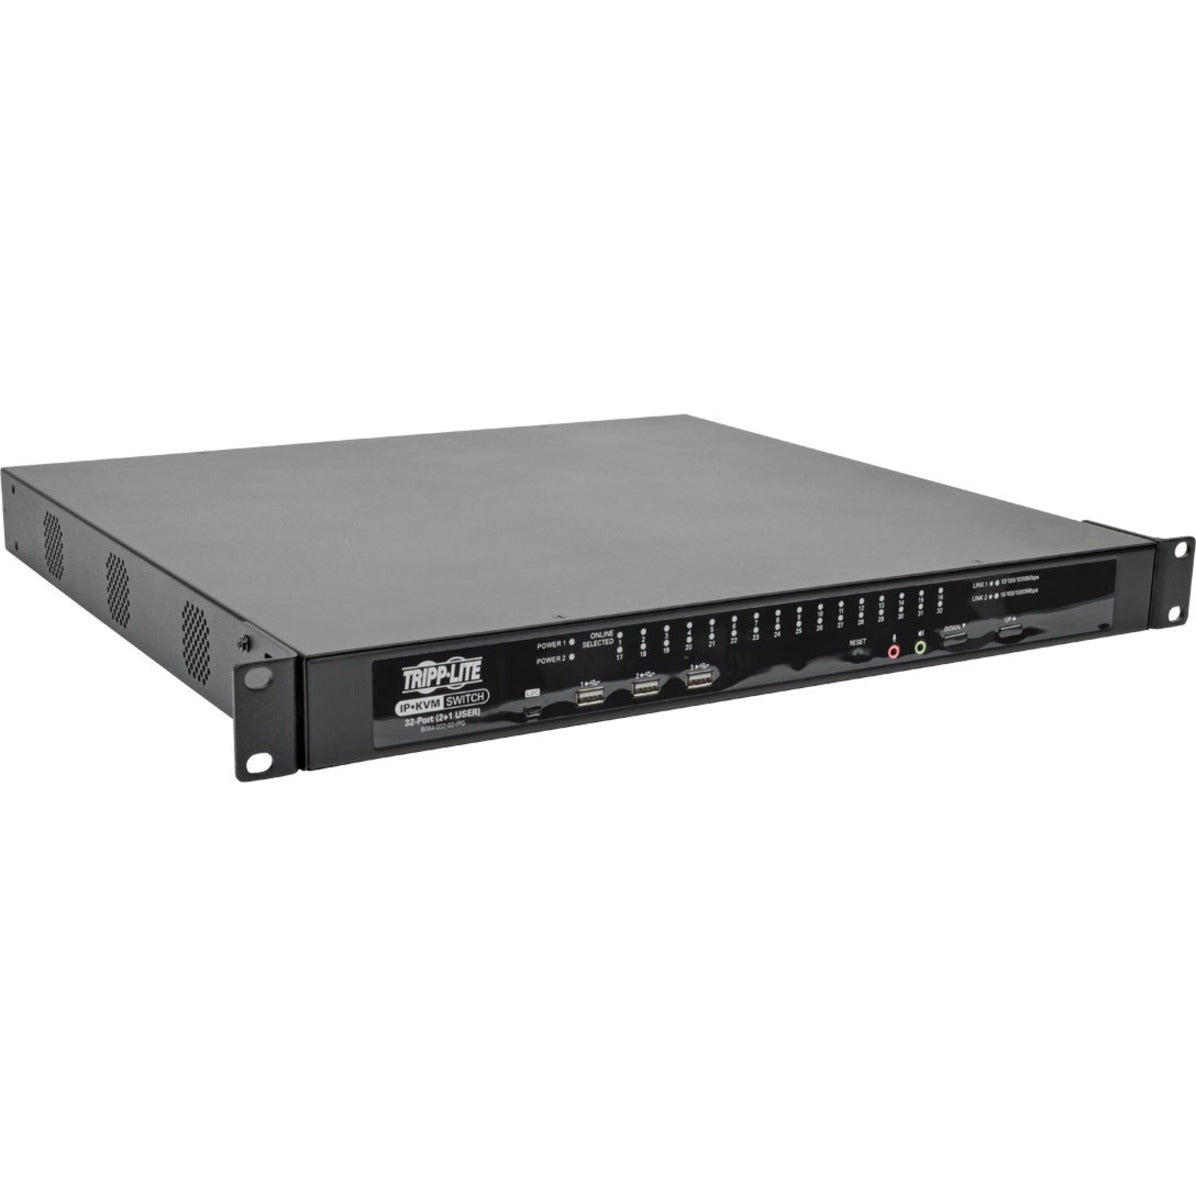 Tripp Lite B064-032-02-IPG NetDirector KVM Switchbox 32 Port 3 Year Warranty TAA Compliant